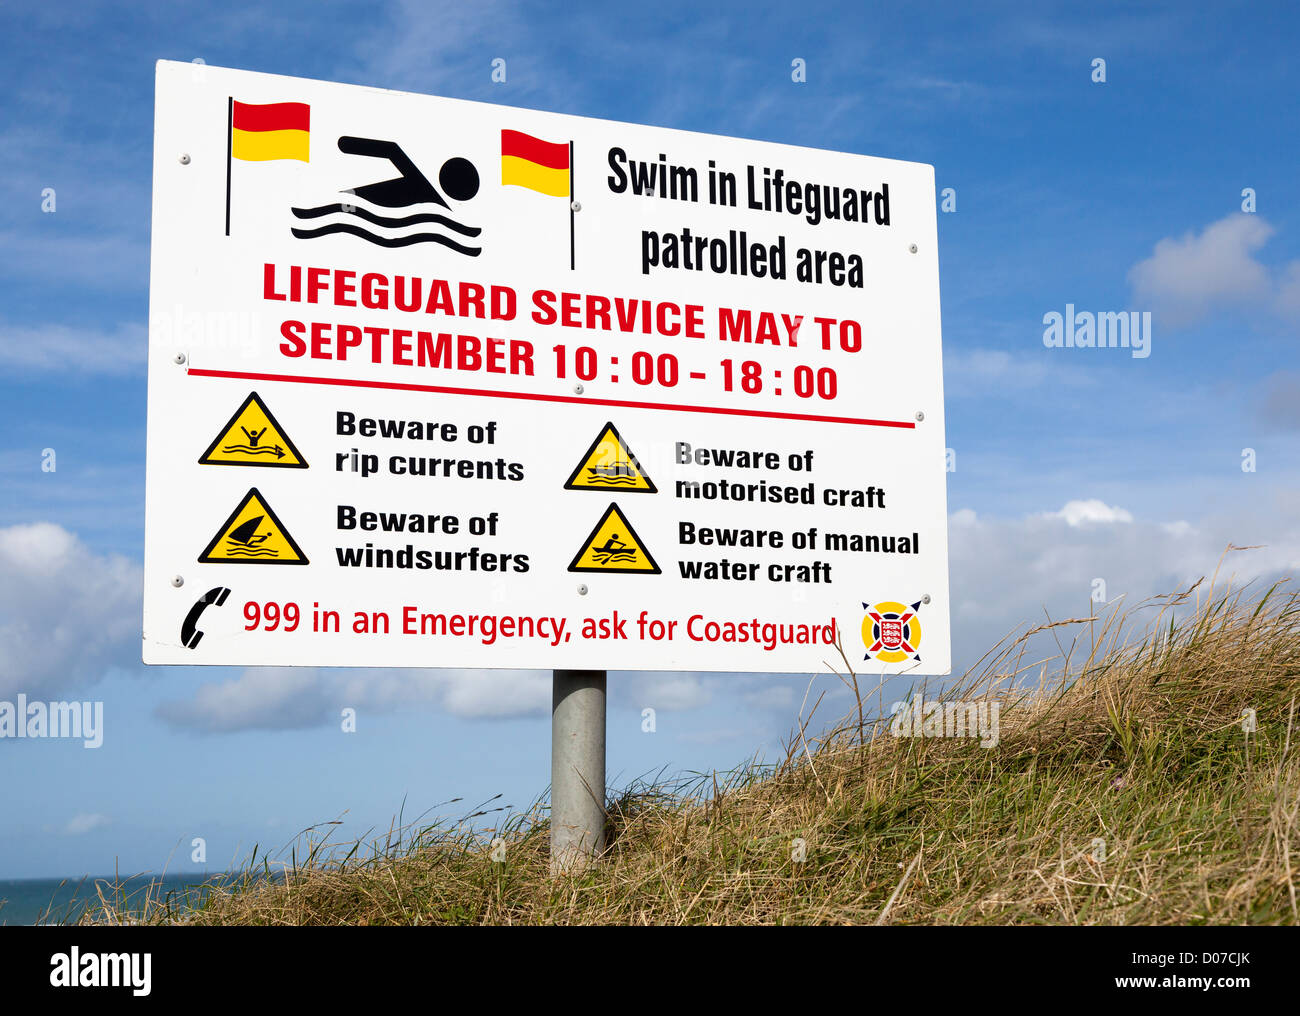 Swim in lifeguard patrolled area sign, St Ouen's Bay, La Baie de St Ouen, Jersey west coast, Channel Islands, UK Stock Photo